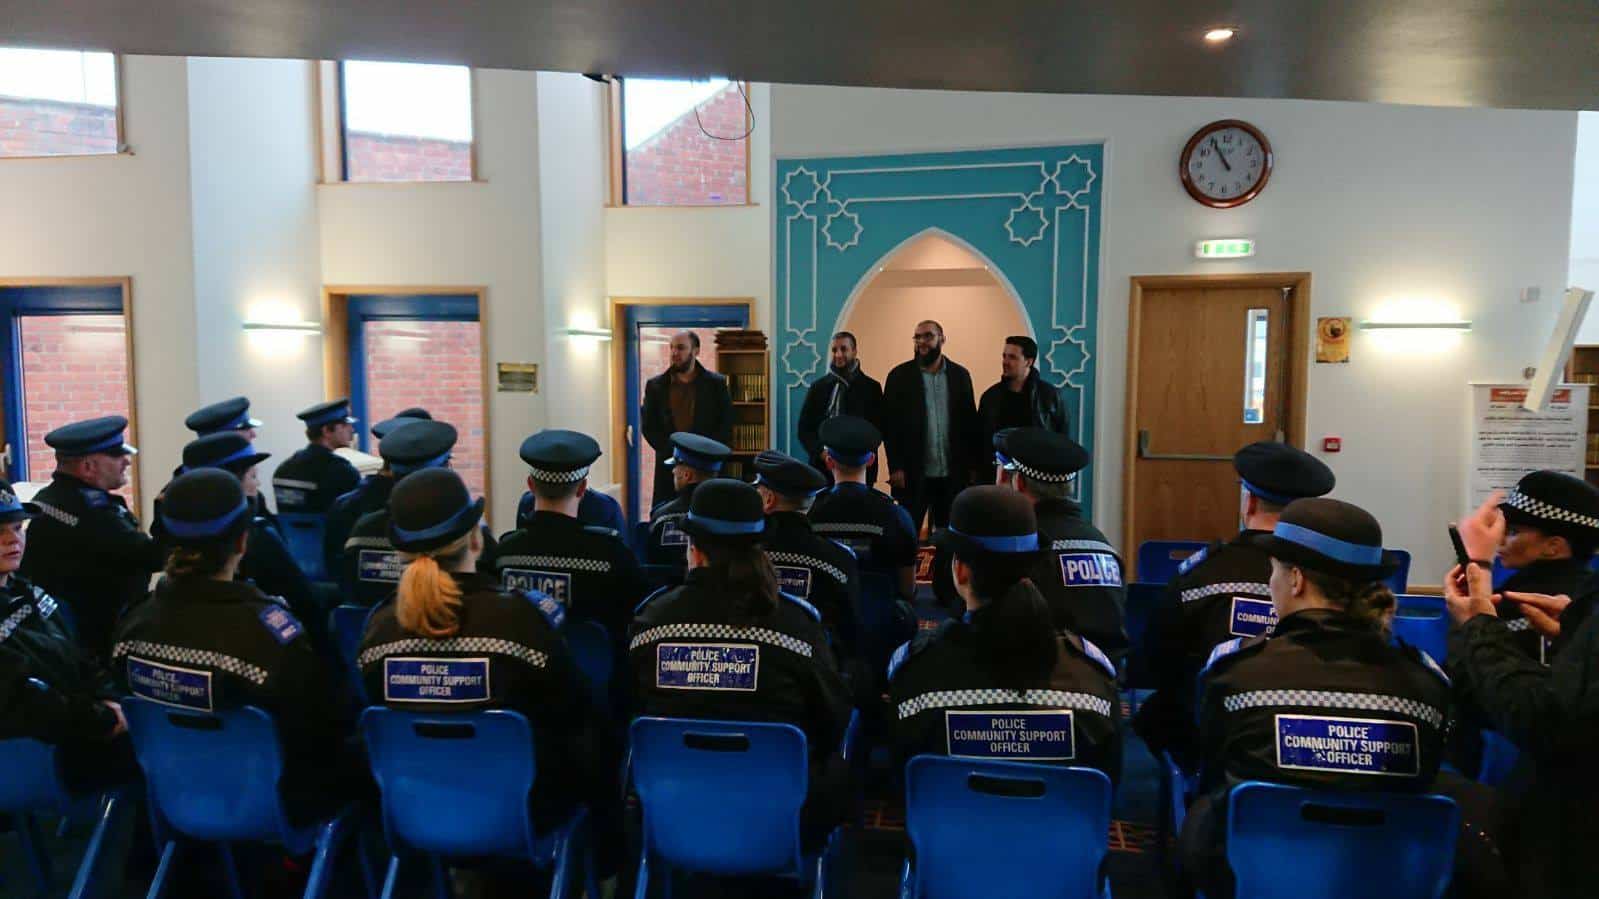 La police a la mosquée de Reading 3